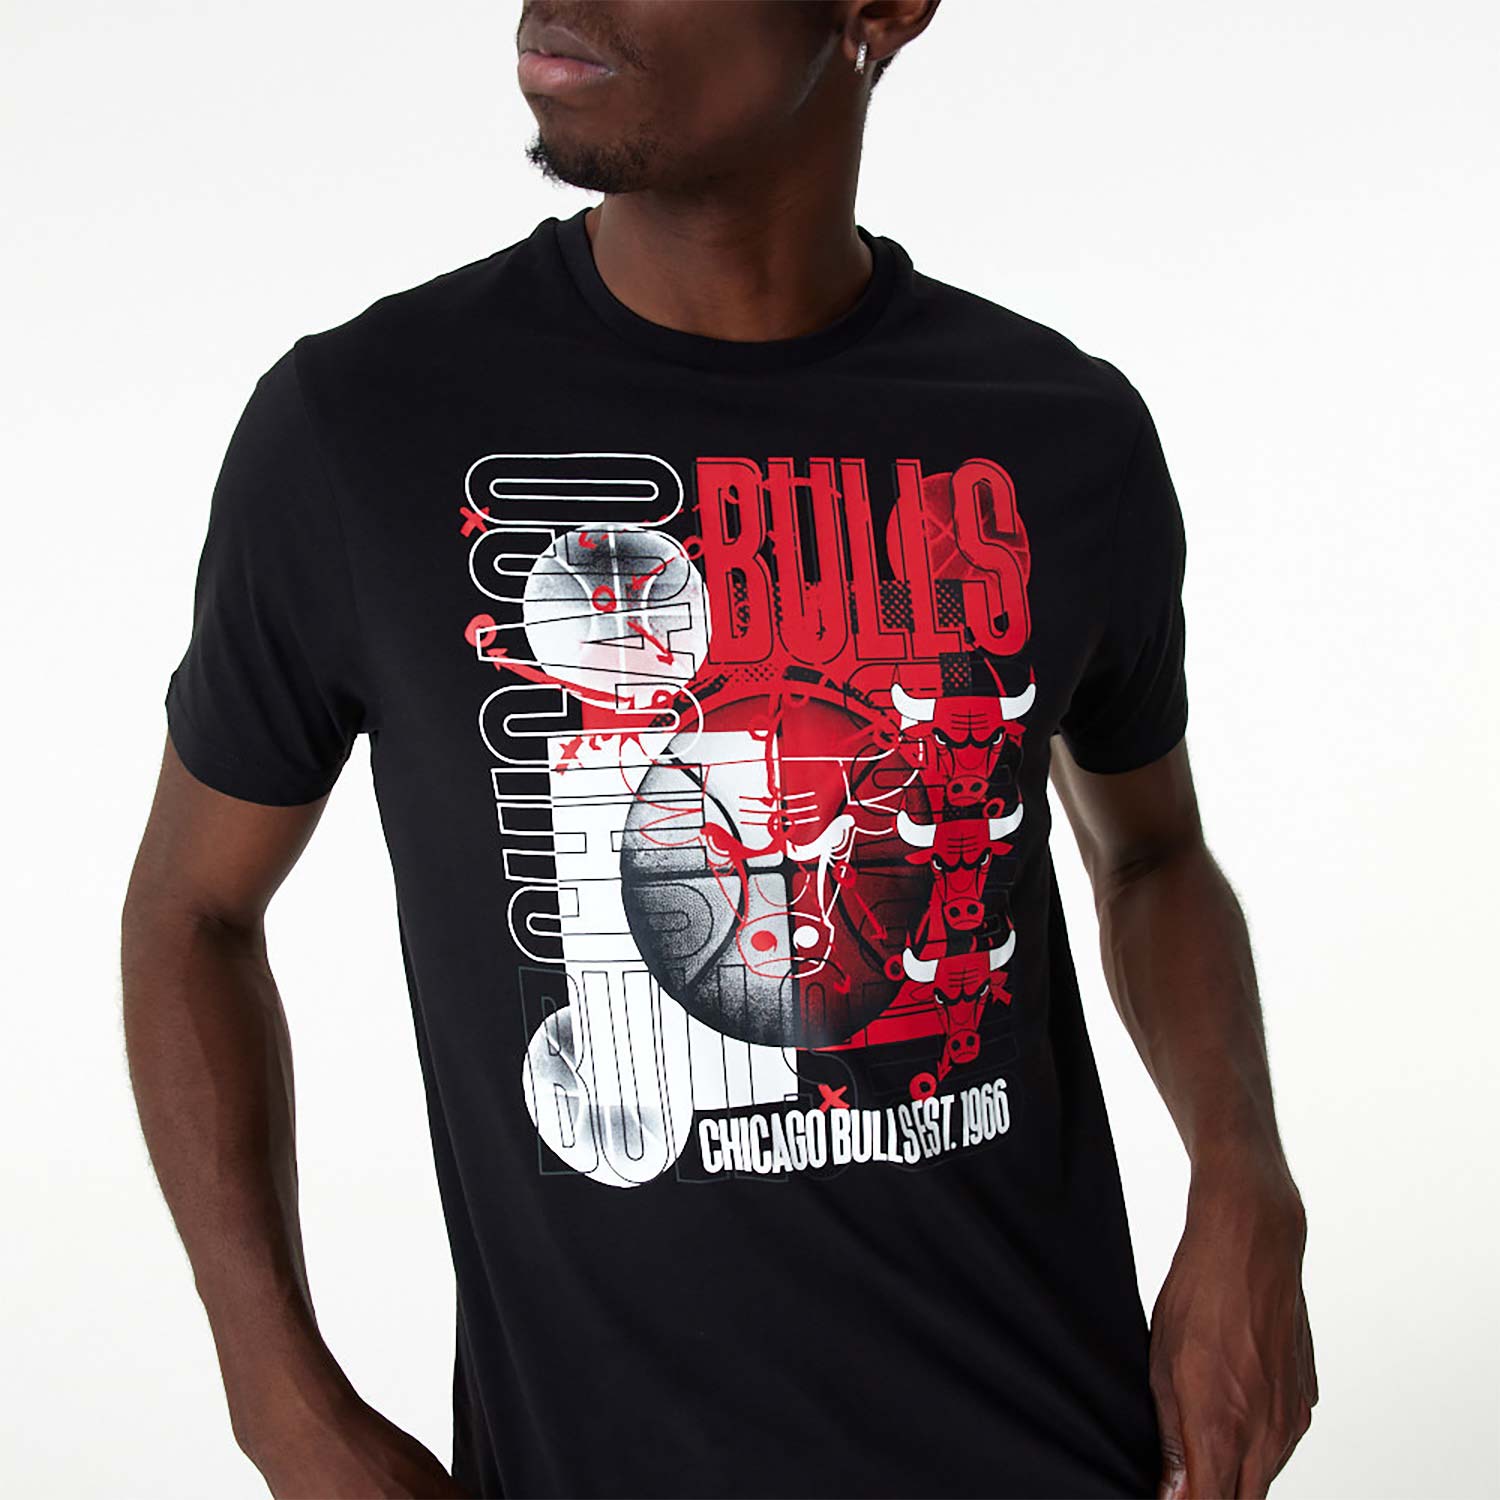 chicago bulls t shirt design